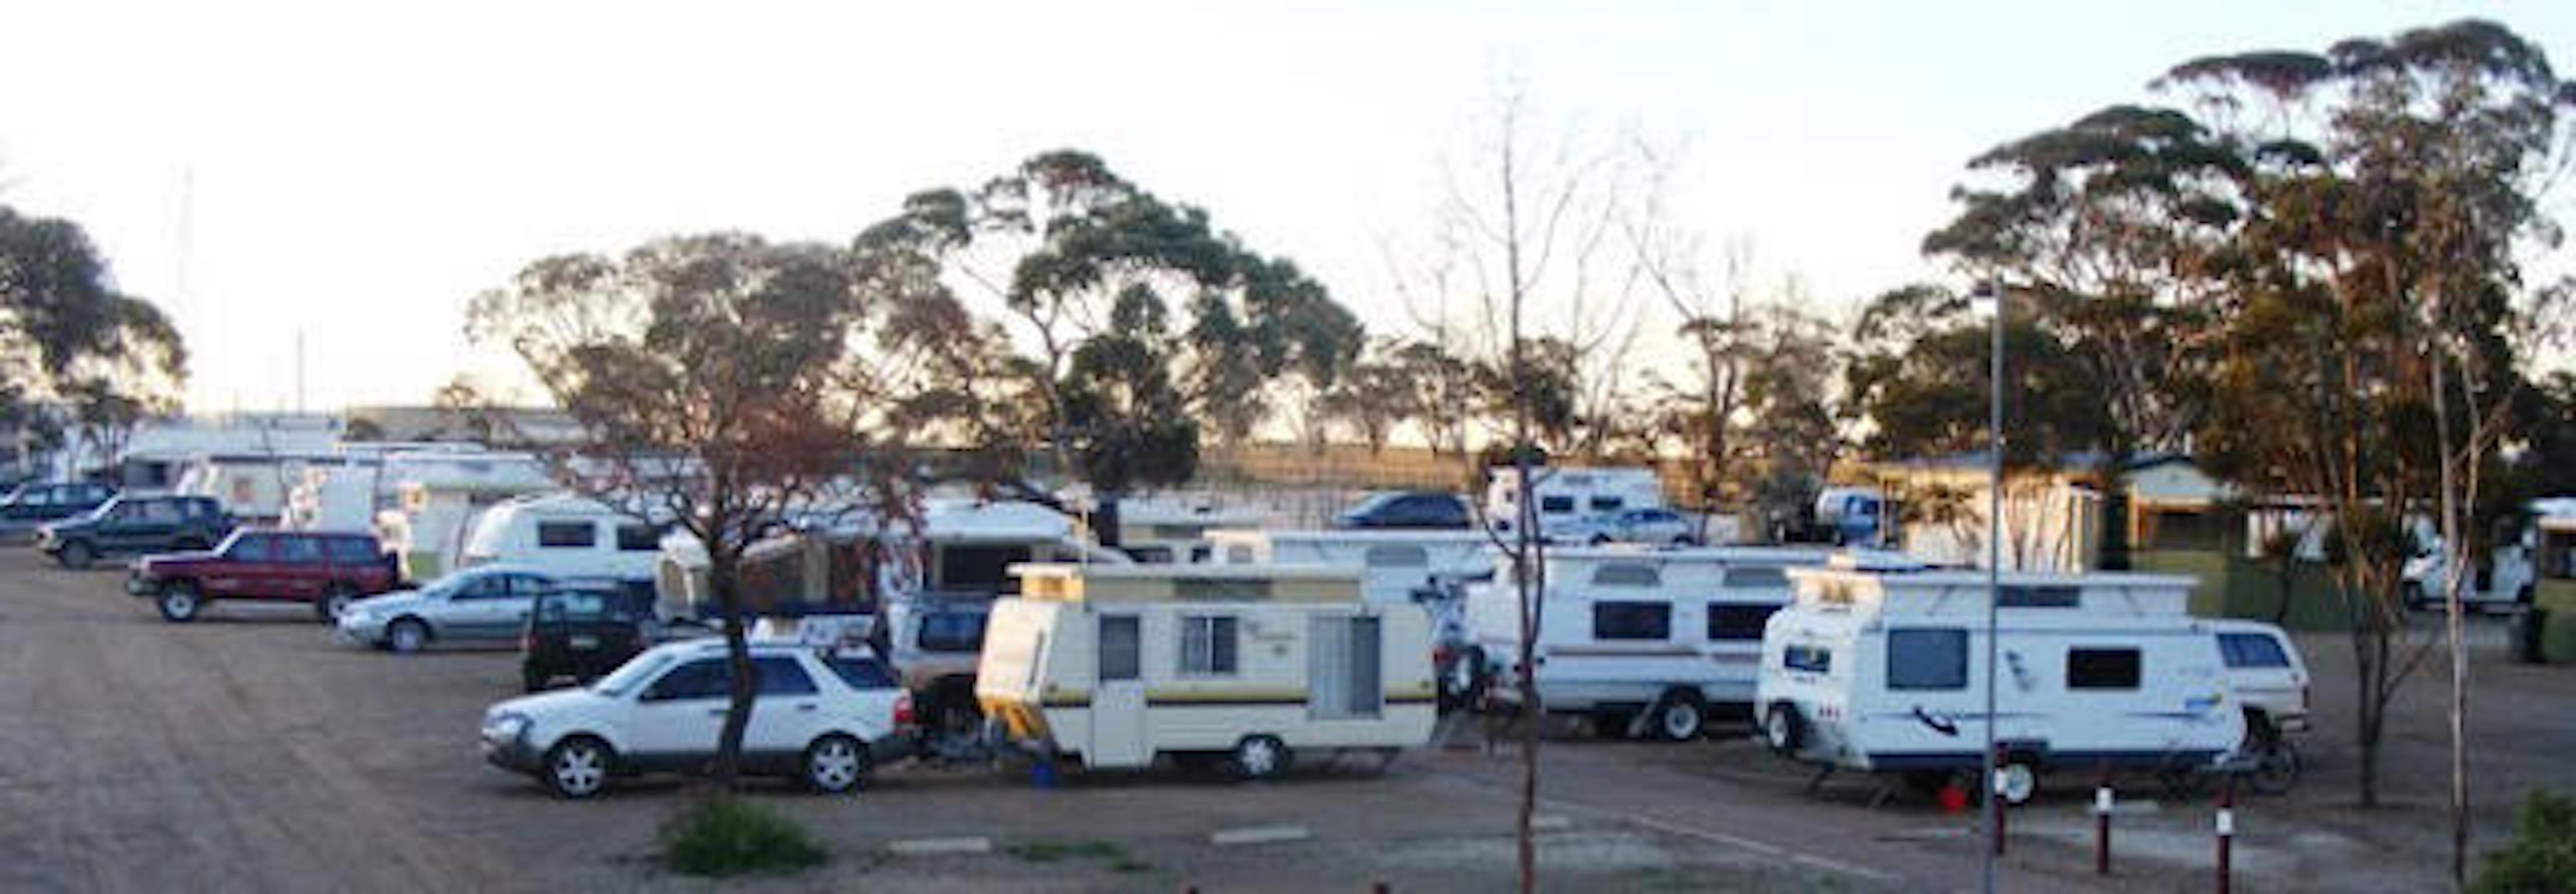 Woomera Traveller's Village and Caravan Park - Accommodation in Bendigo